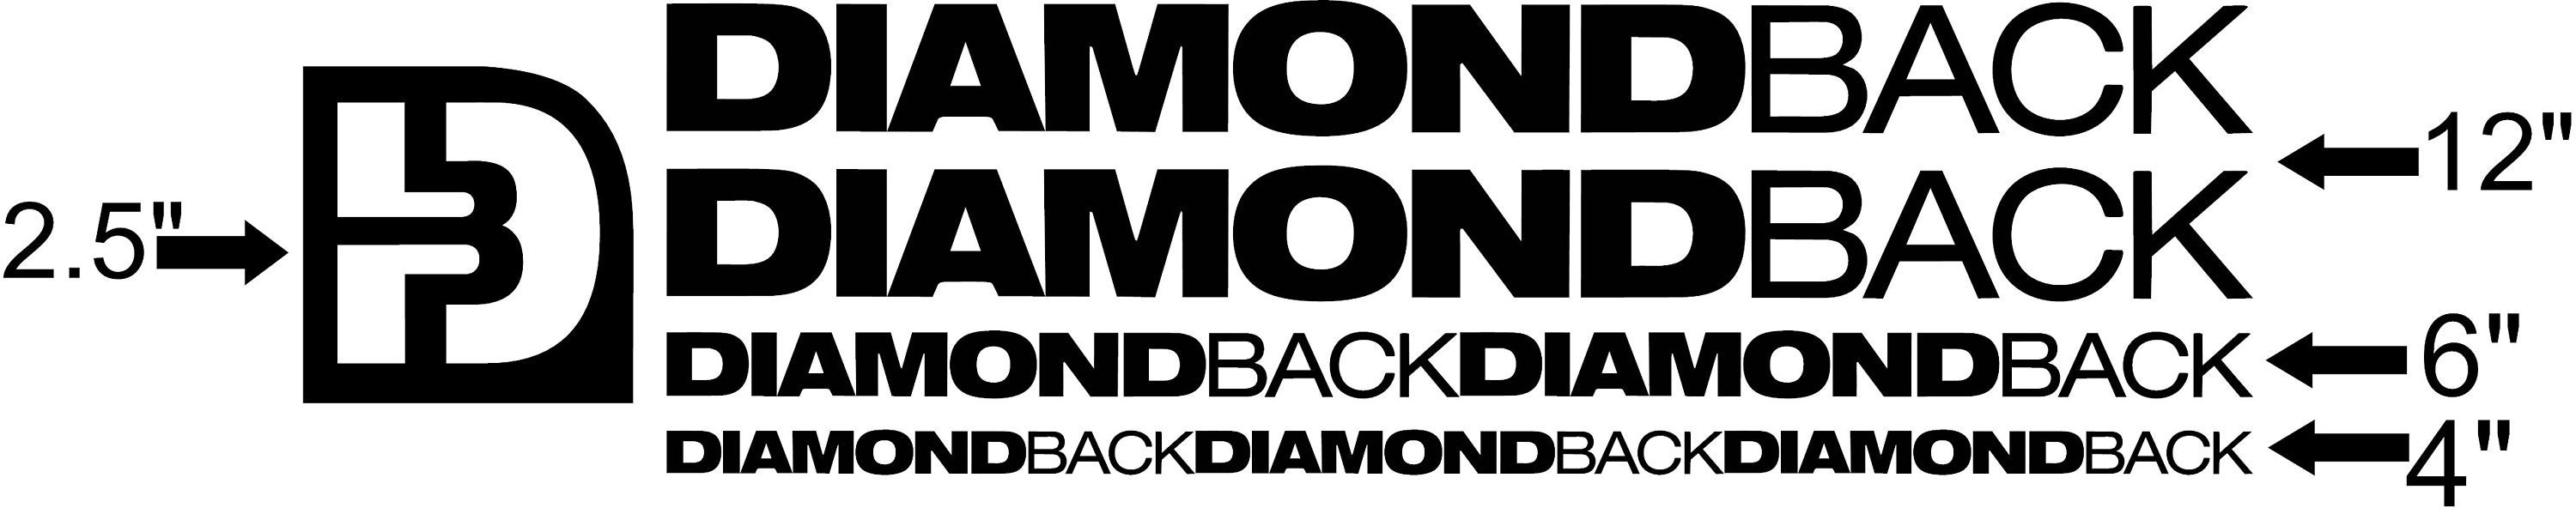 DIAMOND BACK BLACK BIKE DECALS STICKERS LABELS TRANSFERS 